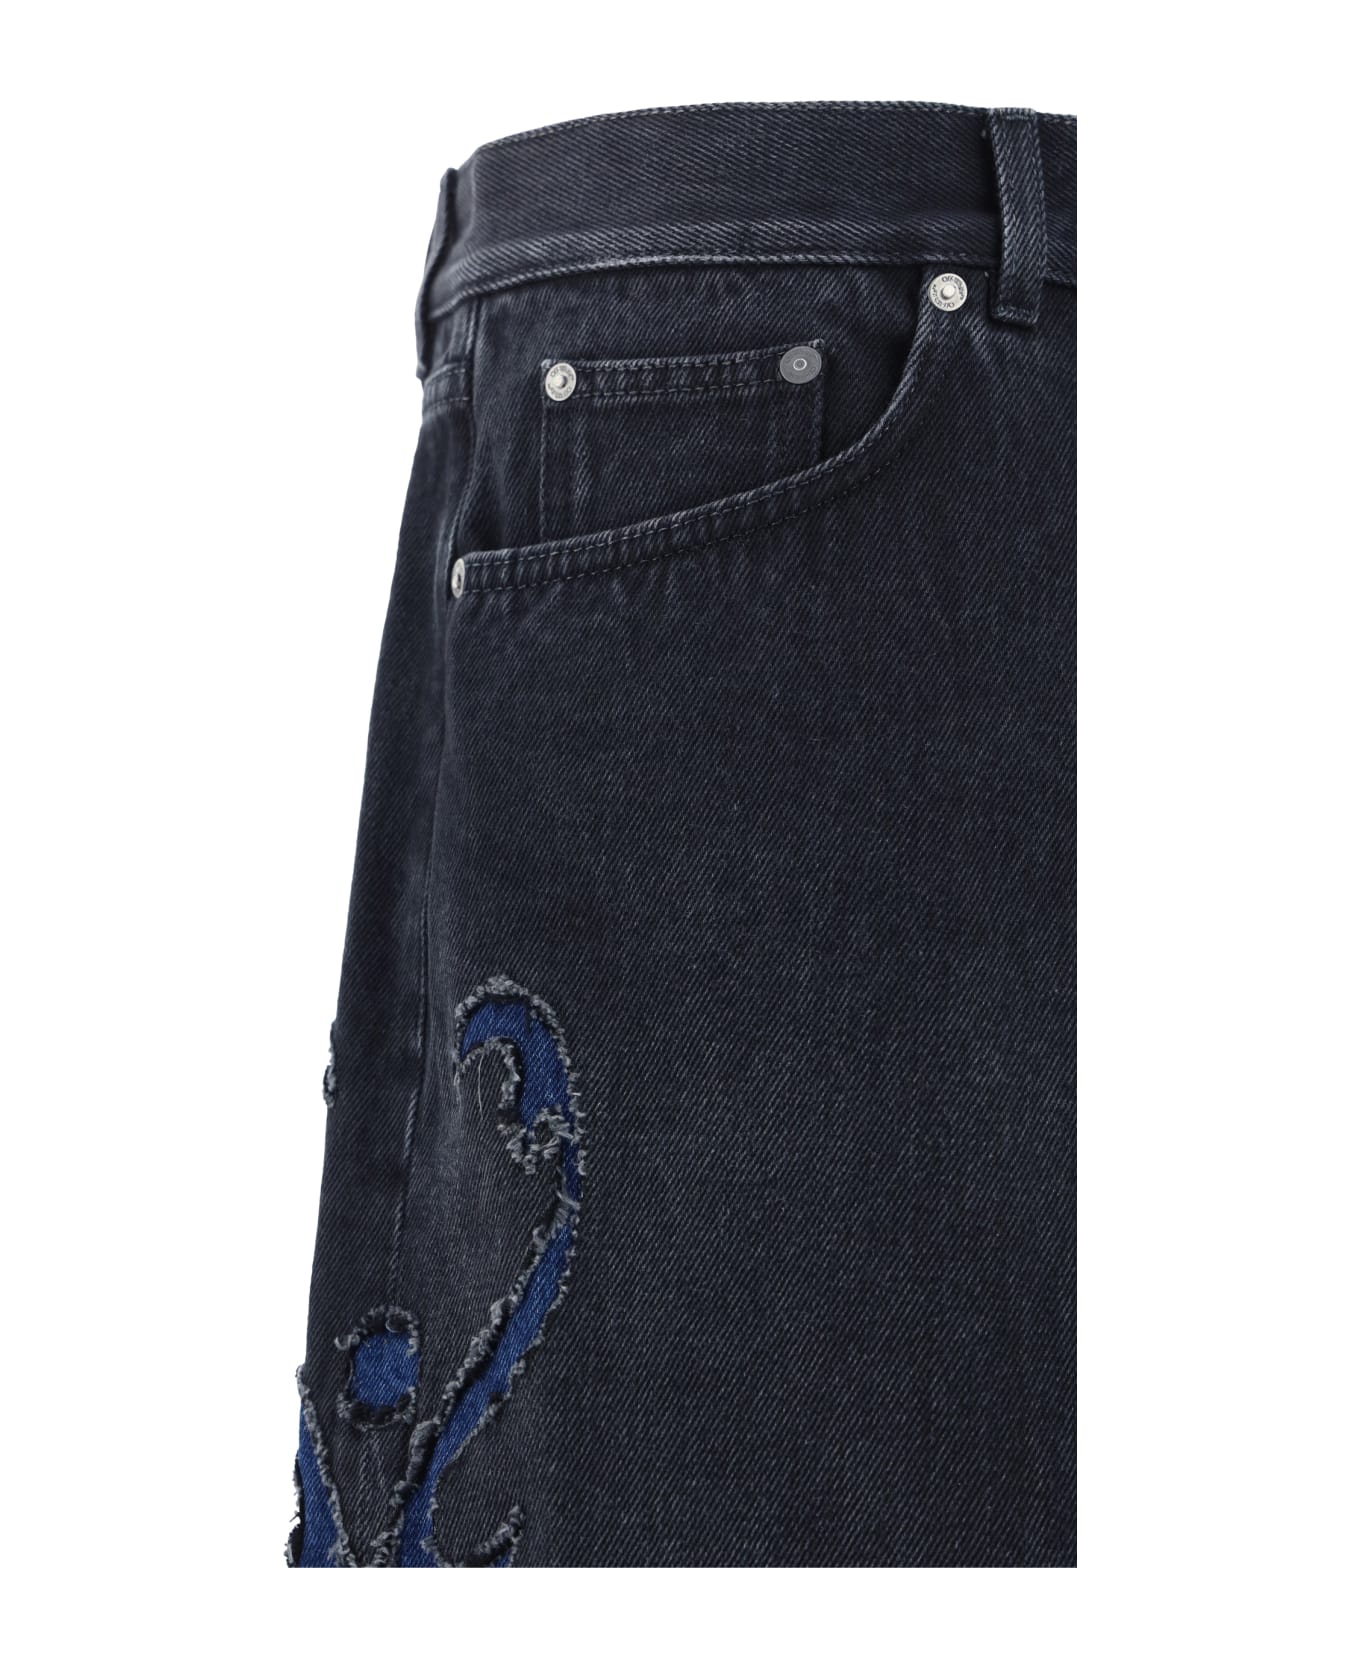 Off-White Super Baggy Jeans - Vintage Black  Nautical Blue